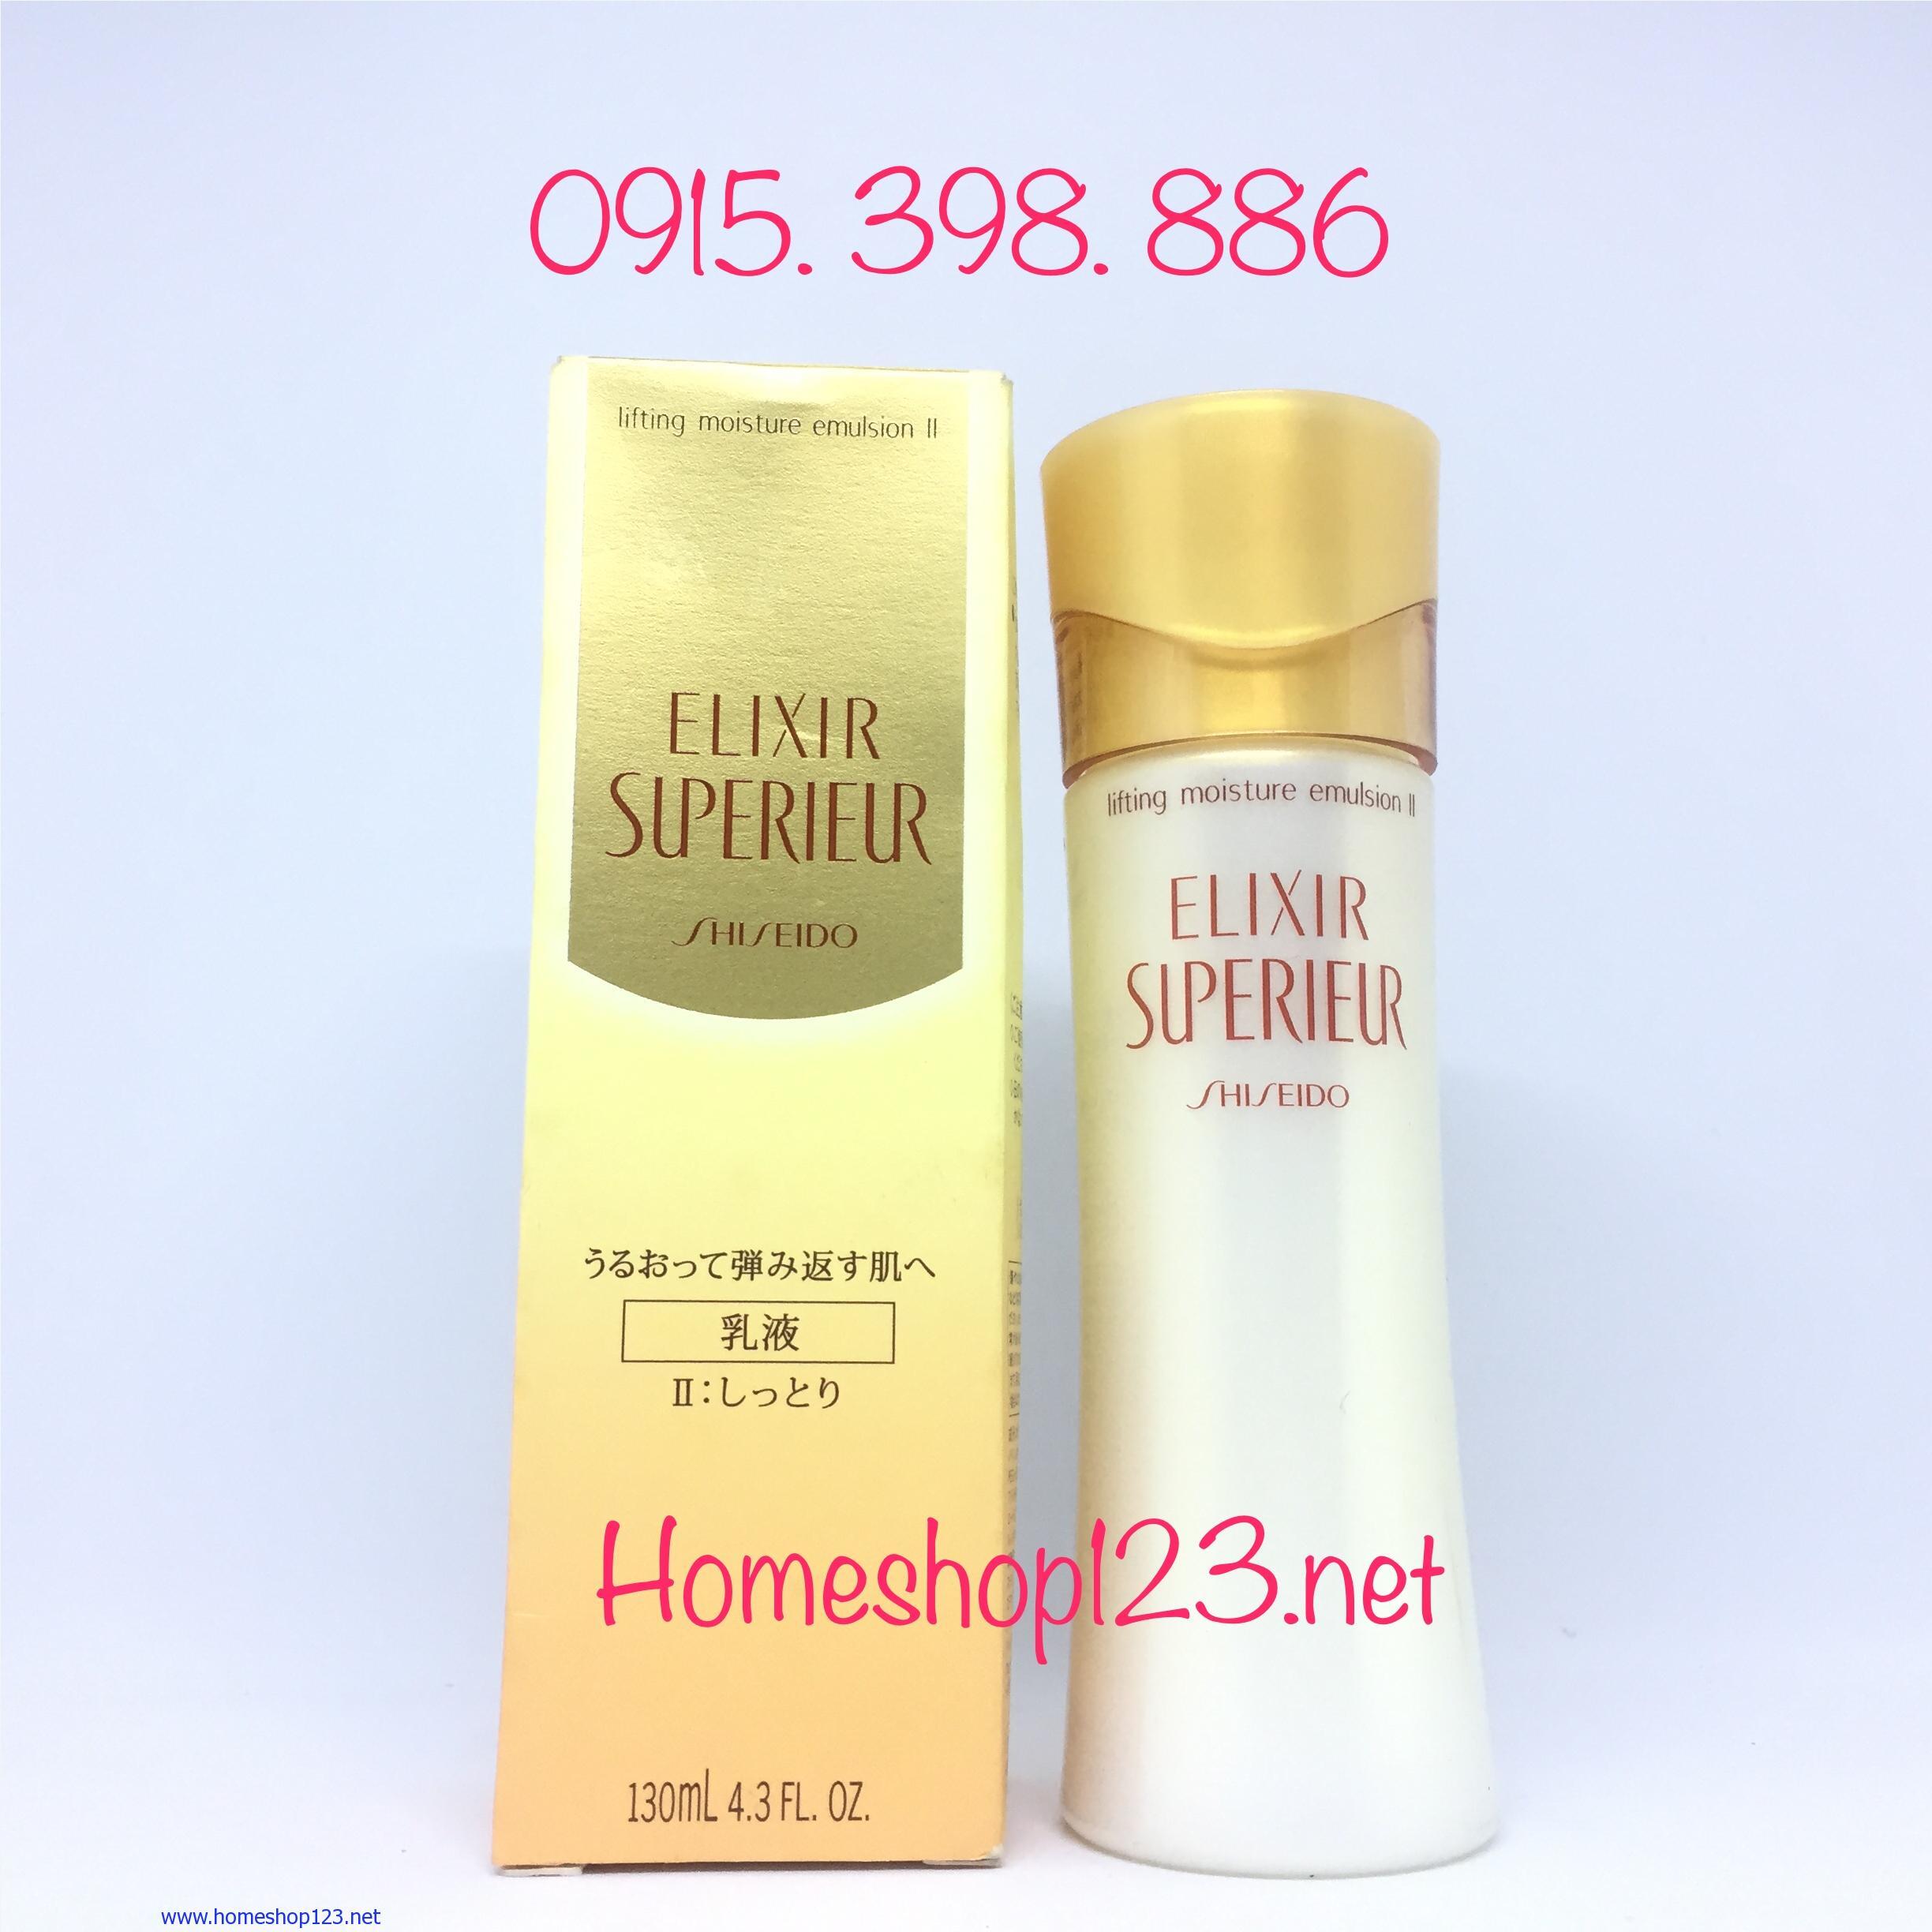 Sữa dưỡng Shiseido Elixir Superieur Lifting moistre Emulsion II